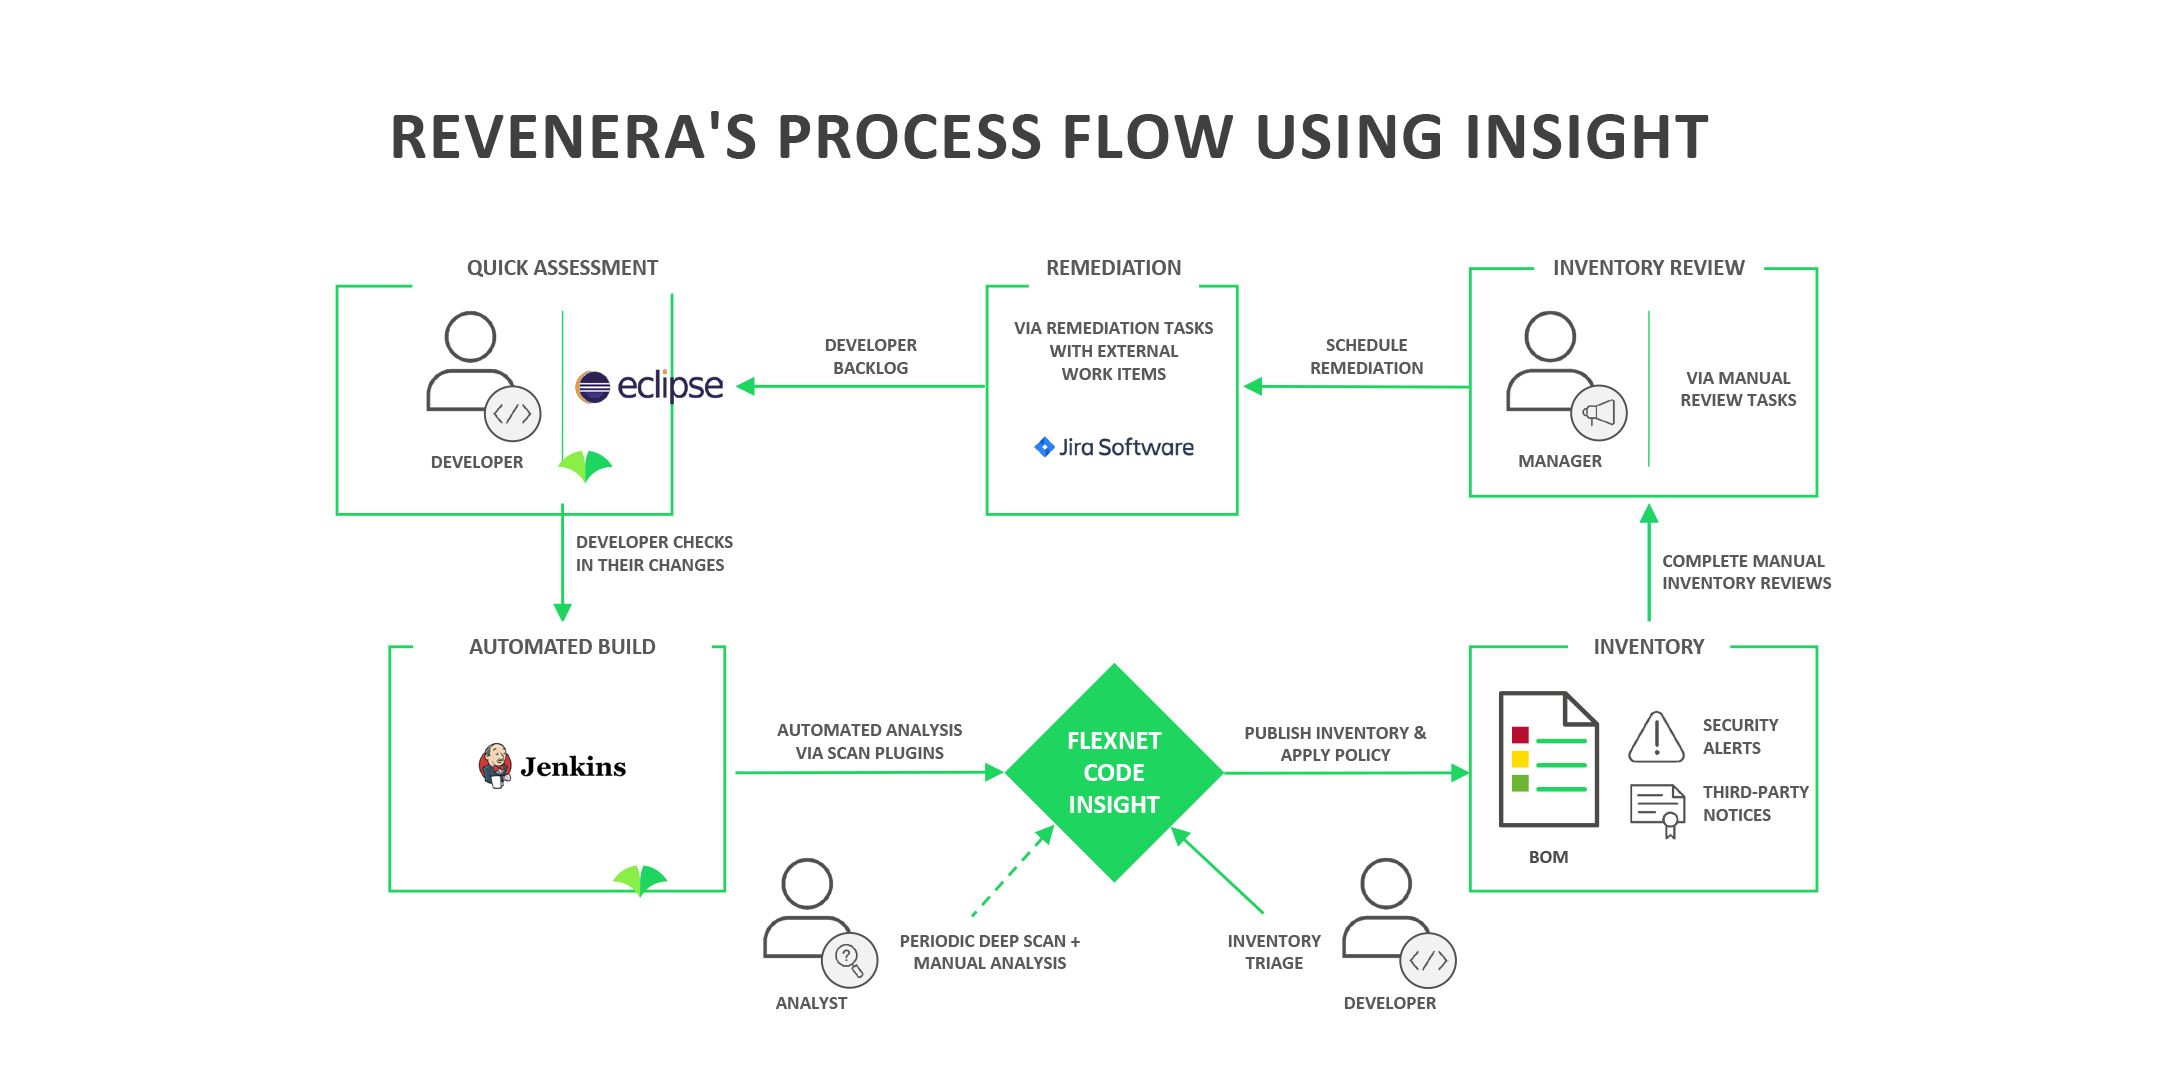 Revenera's process flow using insight